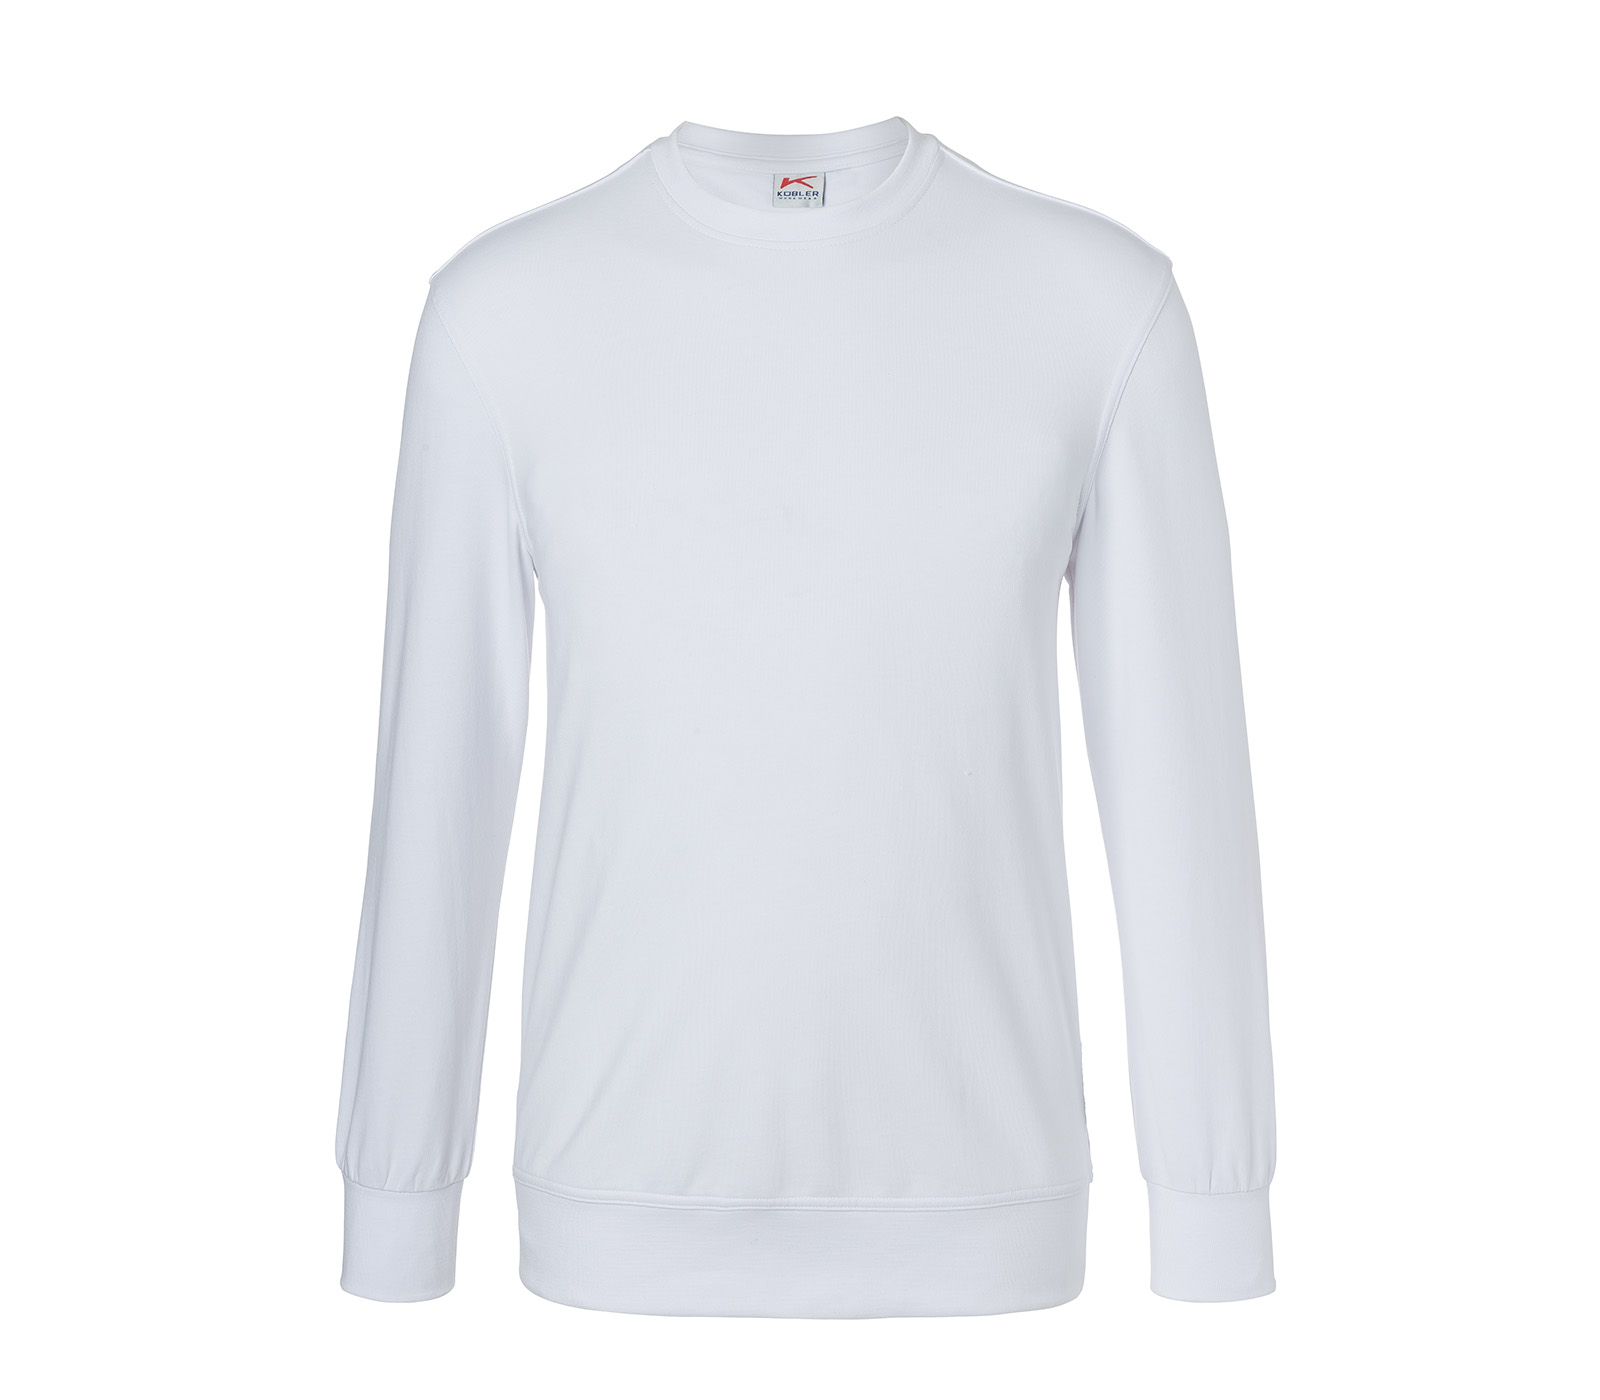 KÜBLER SHIRTS Sweatshirt | 5023 XL | 6330-10-30-XL weiß 